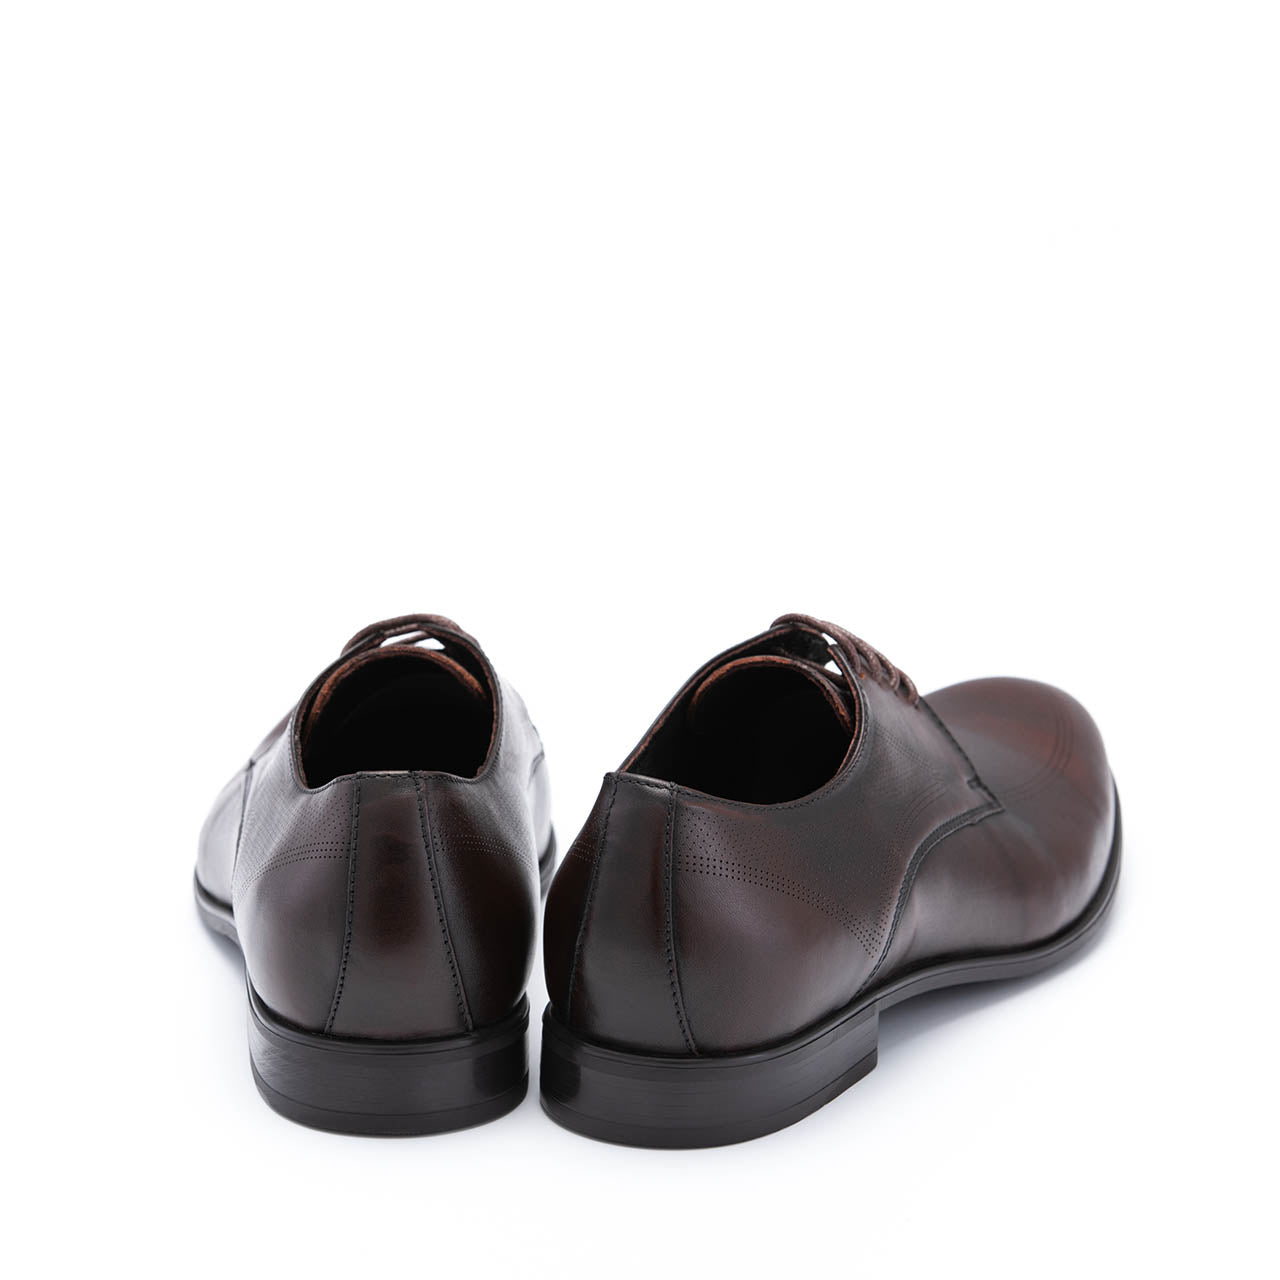 Pantofi eleganti barbati Cedar maro inchis